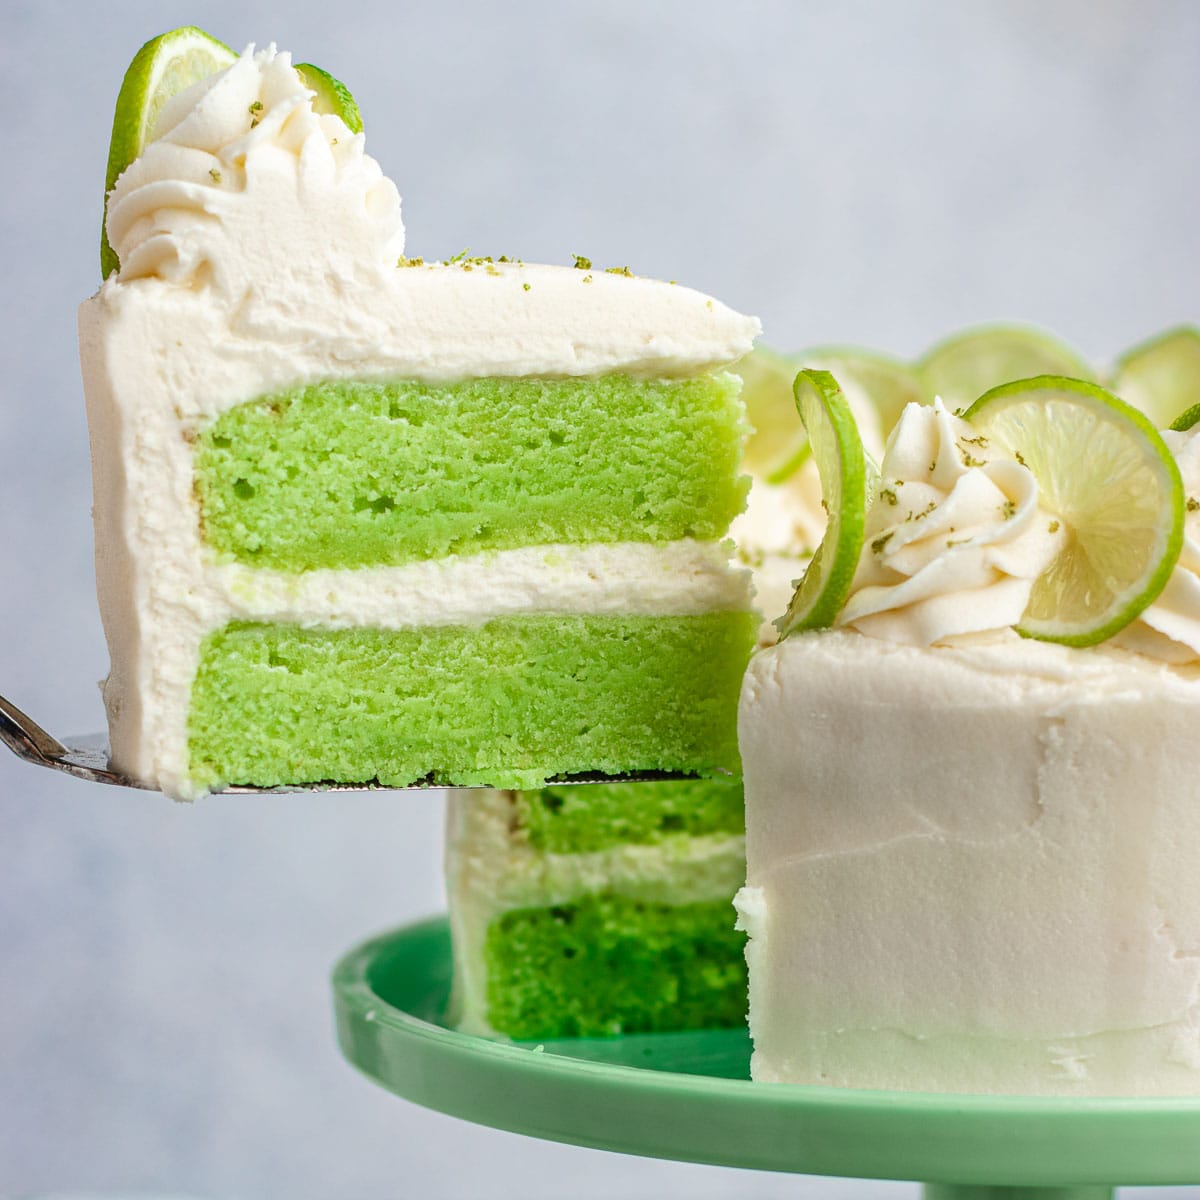 Key Lime Cake lifting slice on cake server away from finished cake